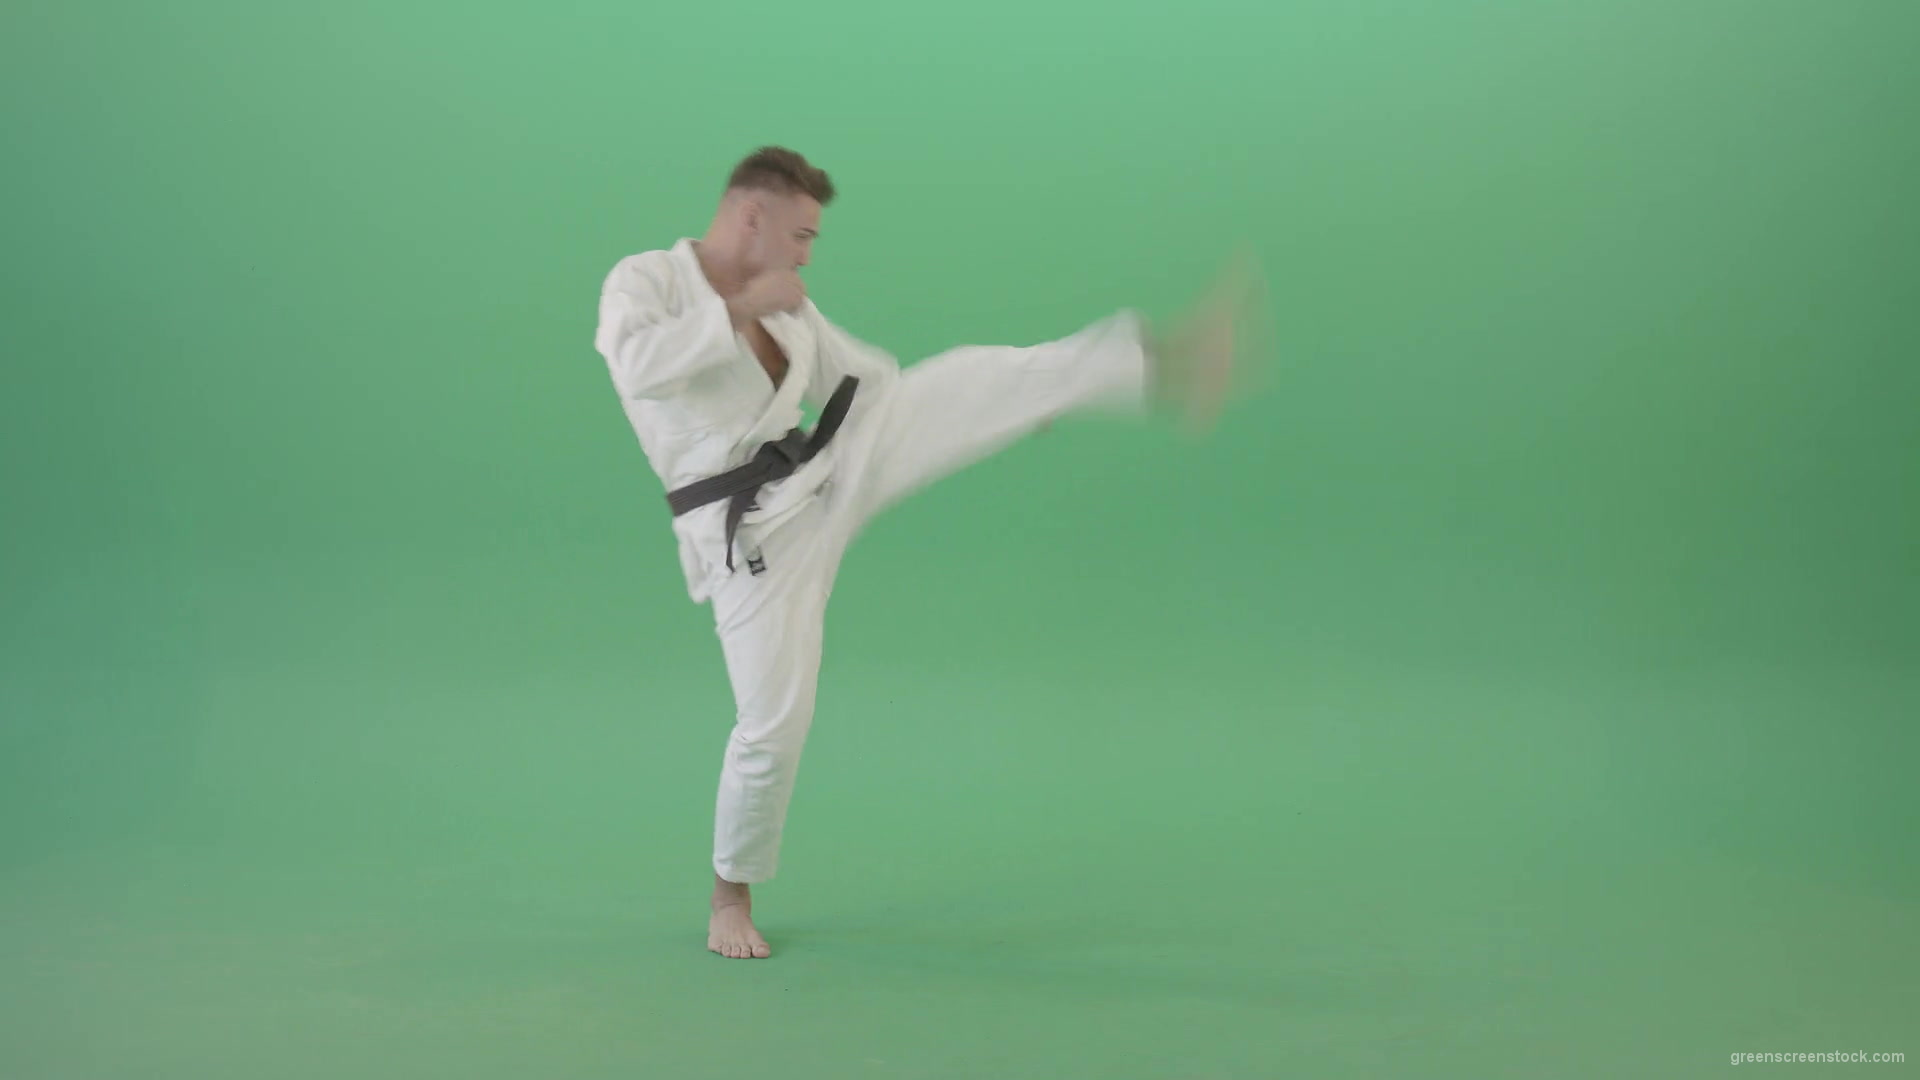 Jujutsu-Sportman-training-isolated-on-green-screen-4K-Video-Footage-1920_007 Green Screen Stock